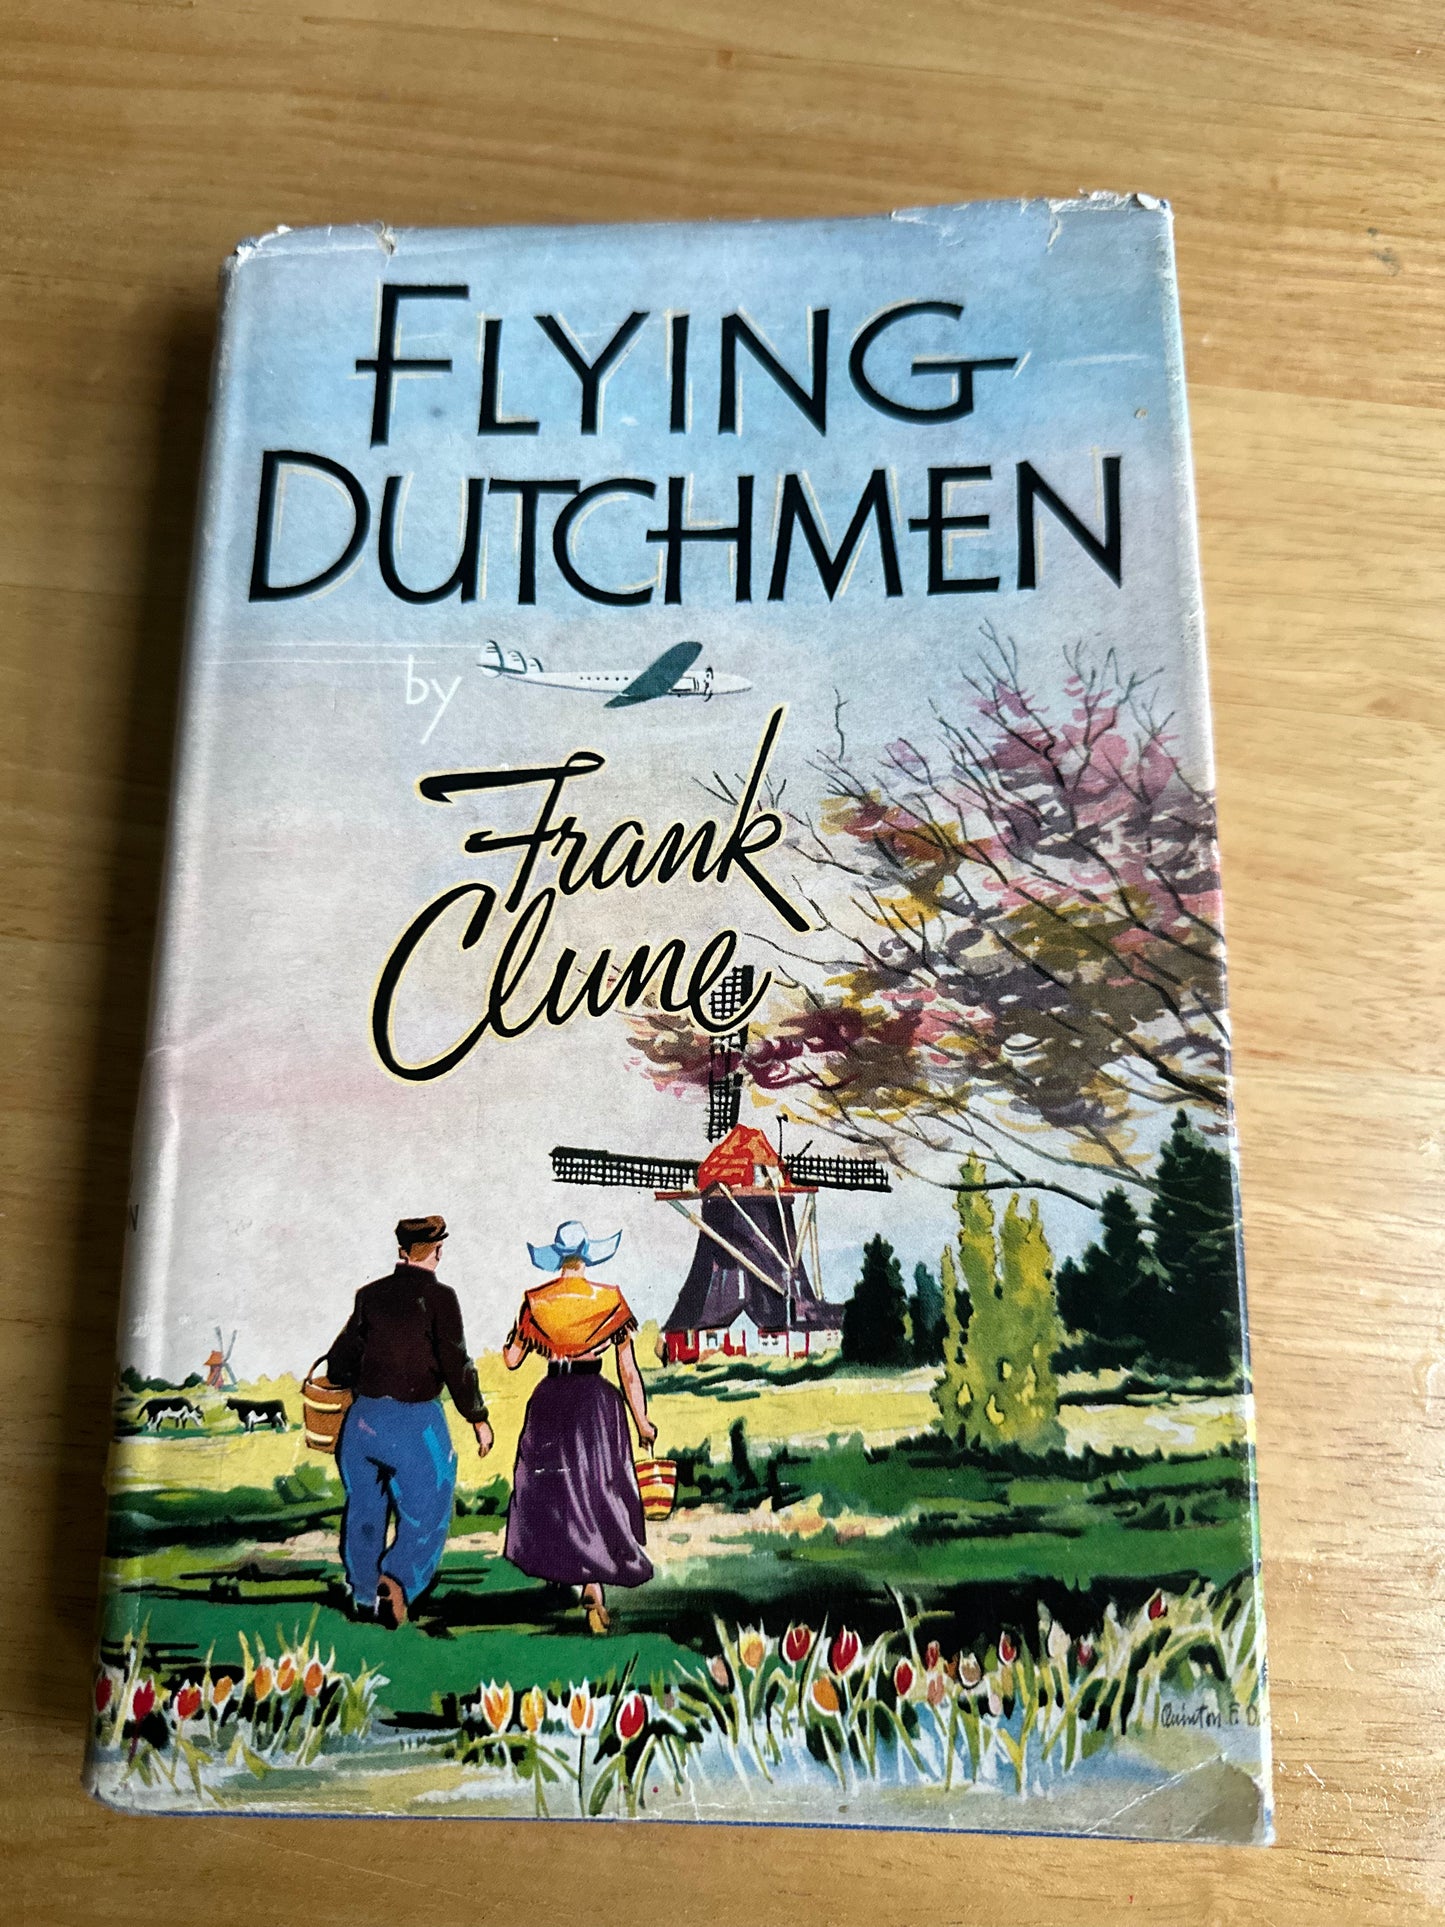 1953*1st* Flying Dutchmen - Frank Clune(illustration Bert Zimmerman) Angus & Robertson publishers